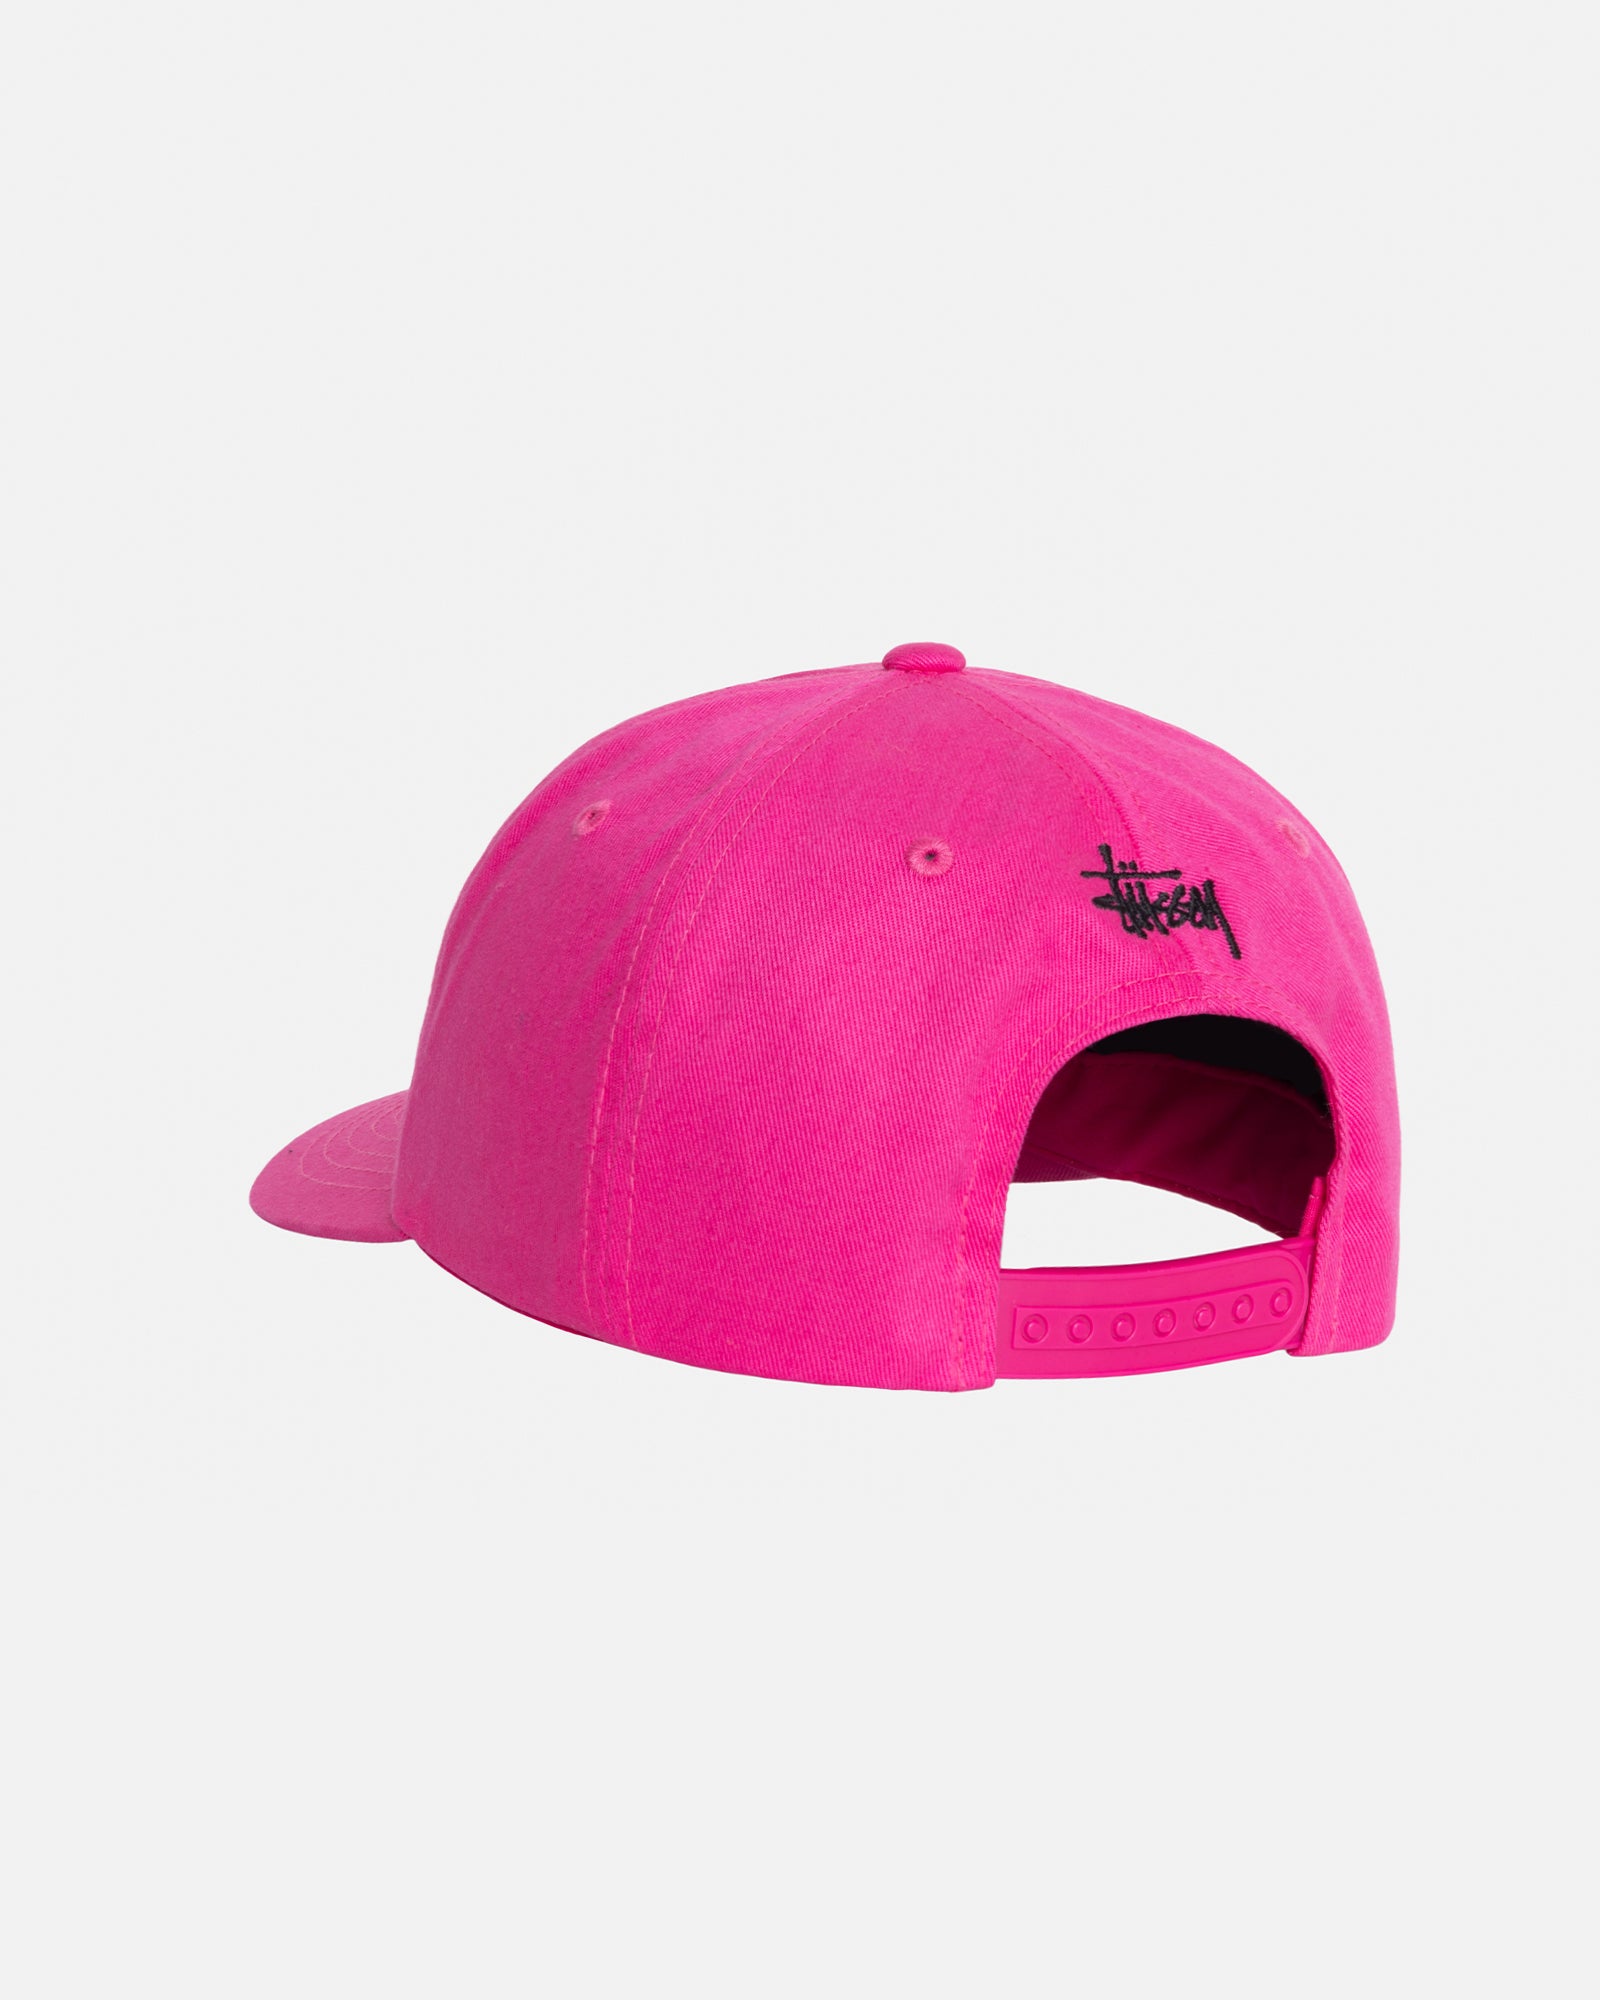 Low Profile Big Basic Snapback Pink Headwear